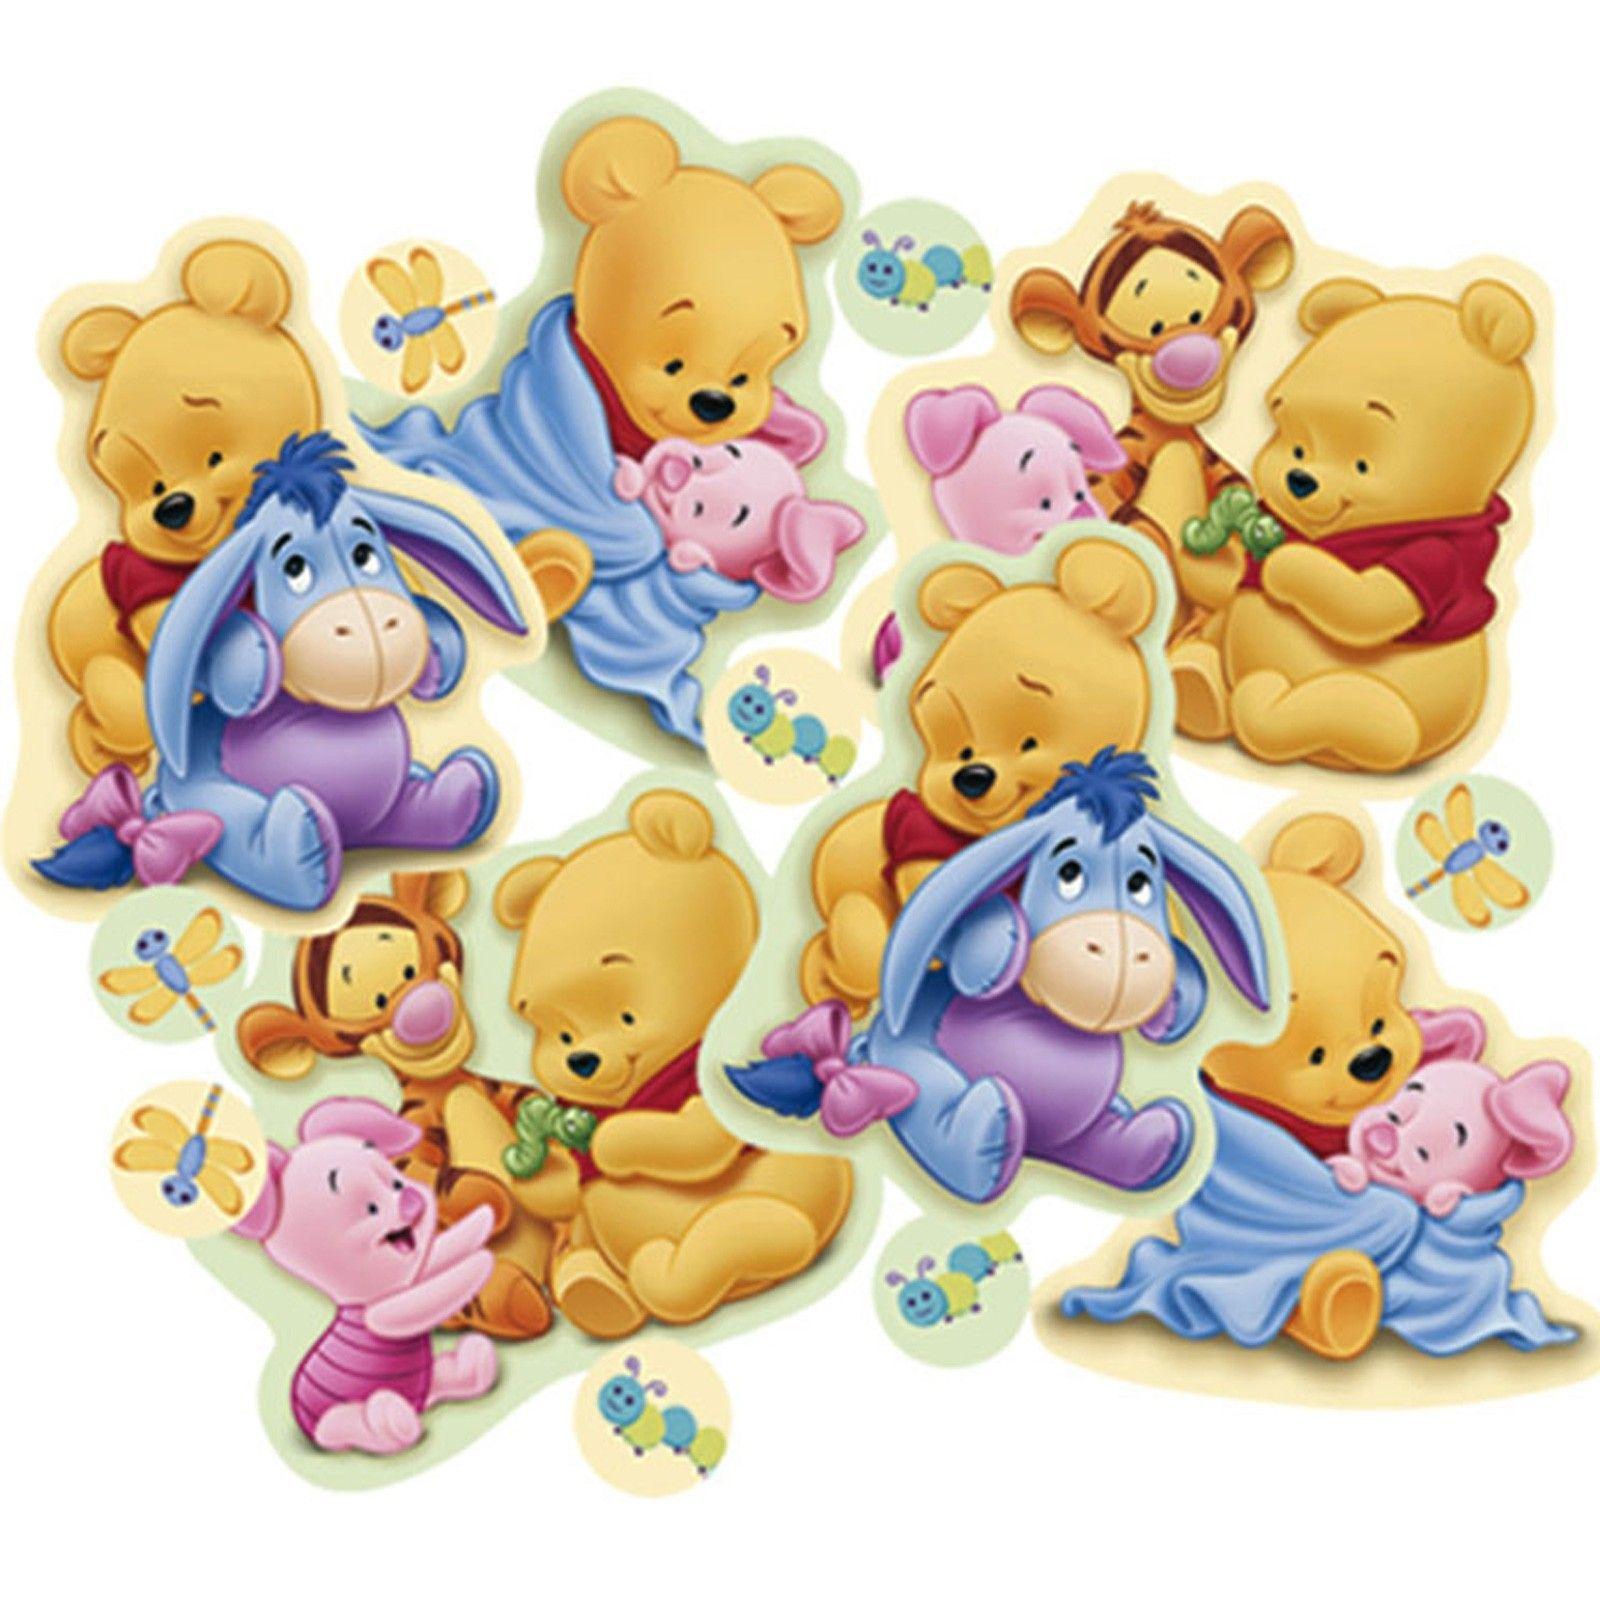 Pooh Bear Wallpapers - Wallpaper Cave